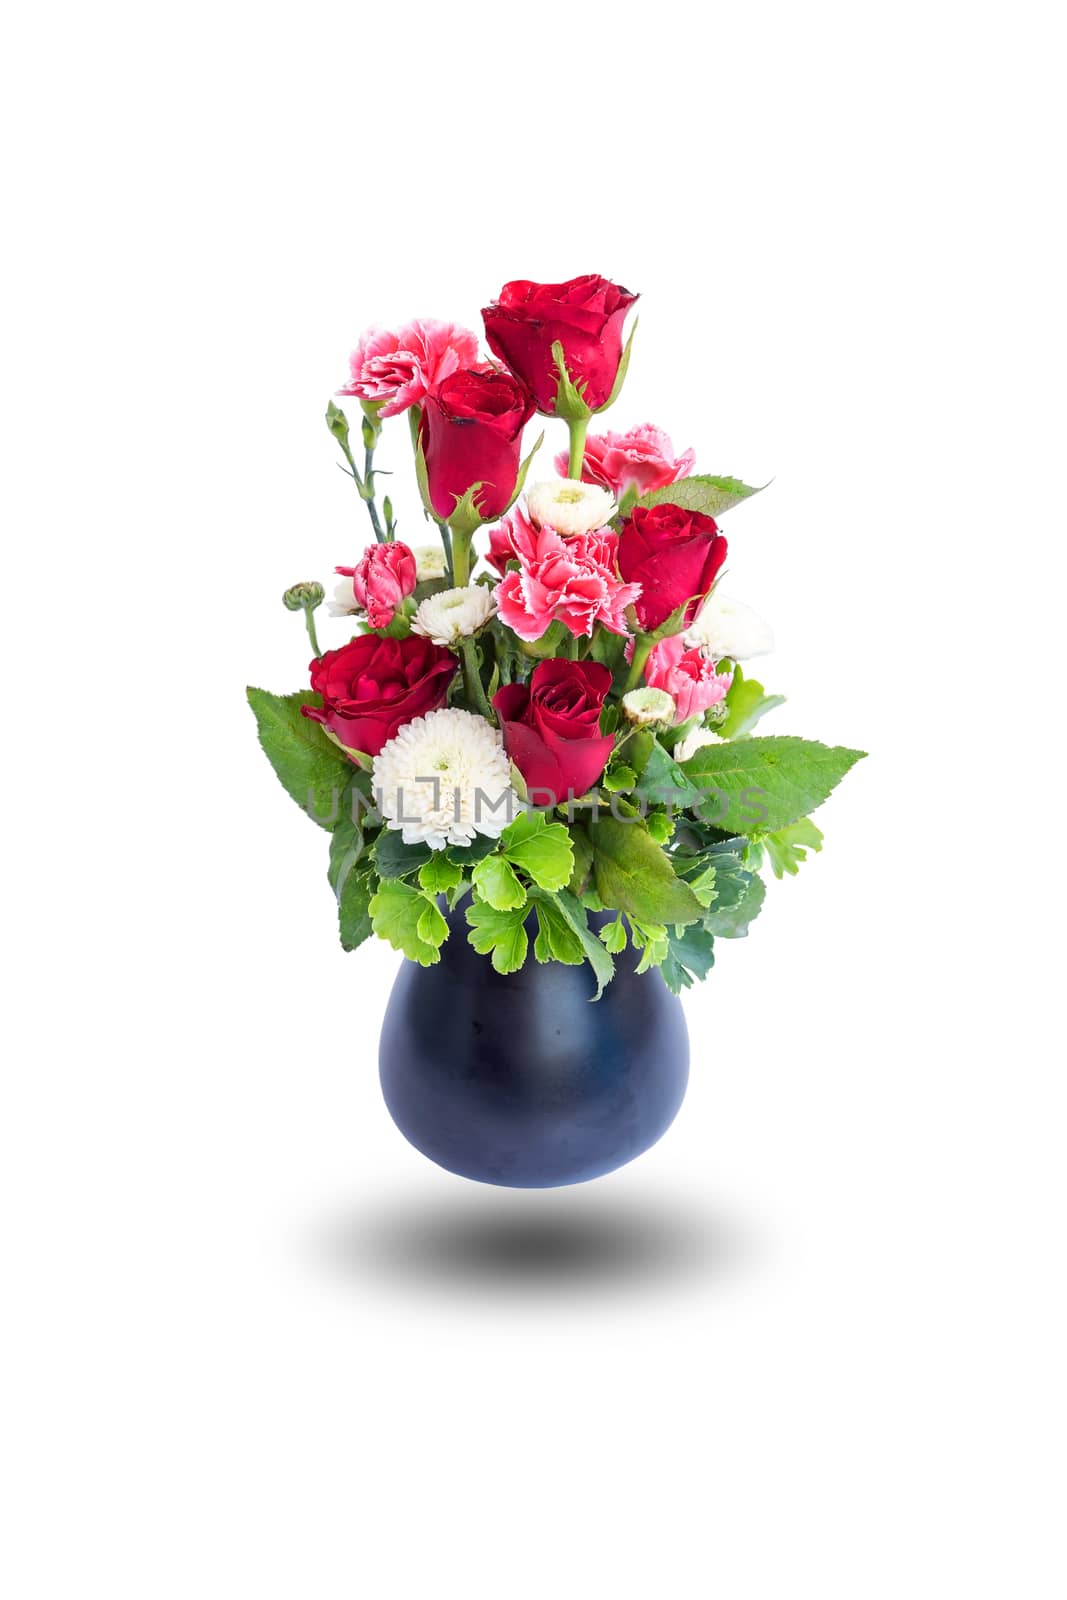 Roses in ceramic vase. by wattanaphob